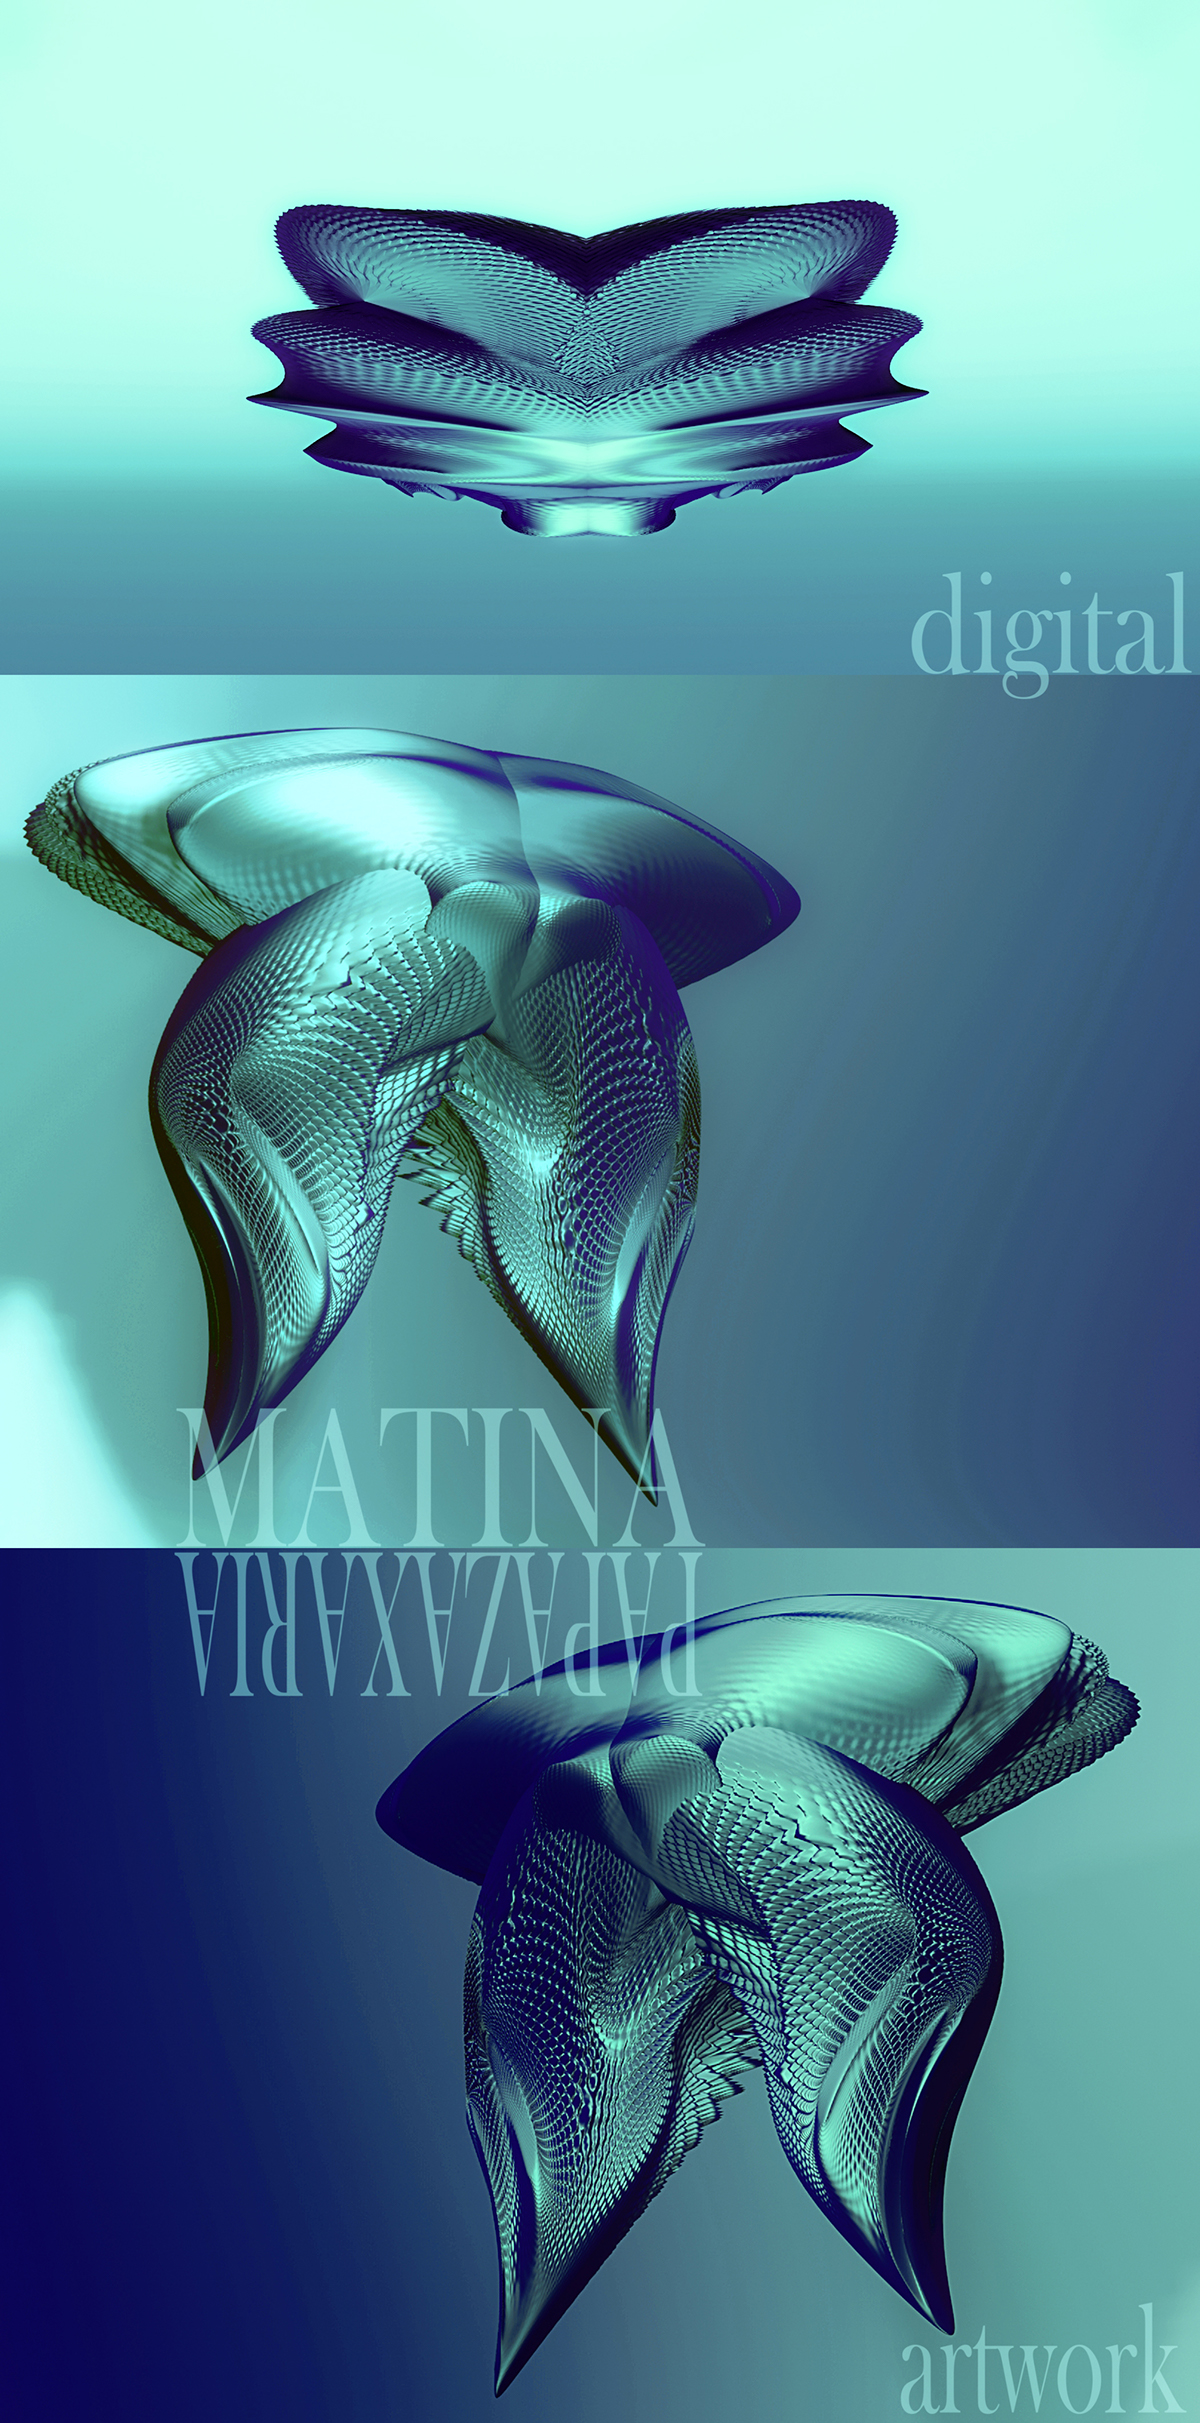 alexander mcqueen 3d art digital design rayfish manta ray stingray Devil ray  matina papazaxaria